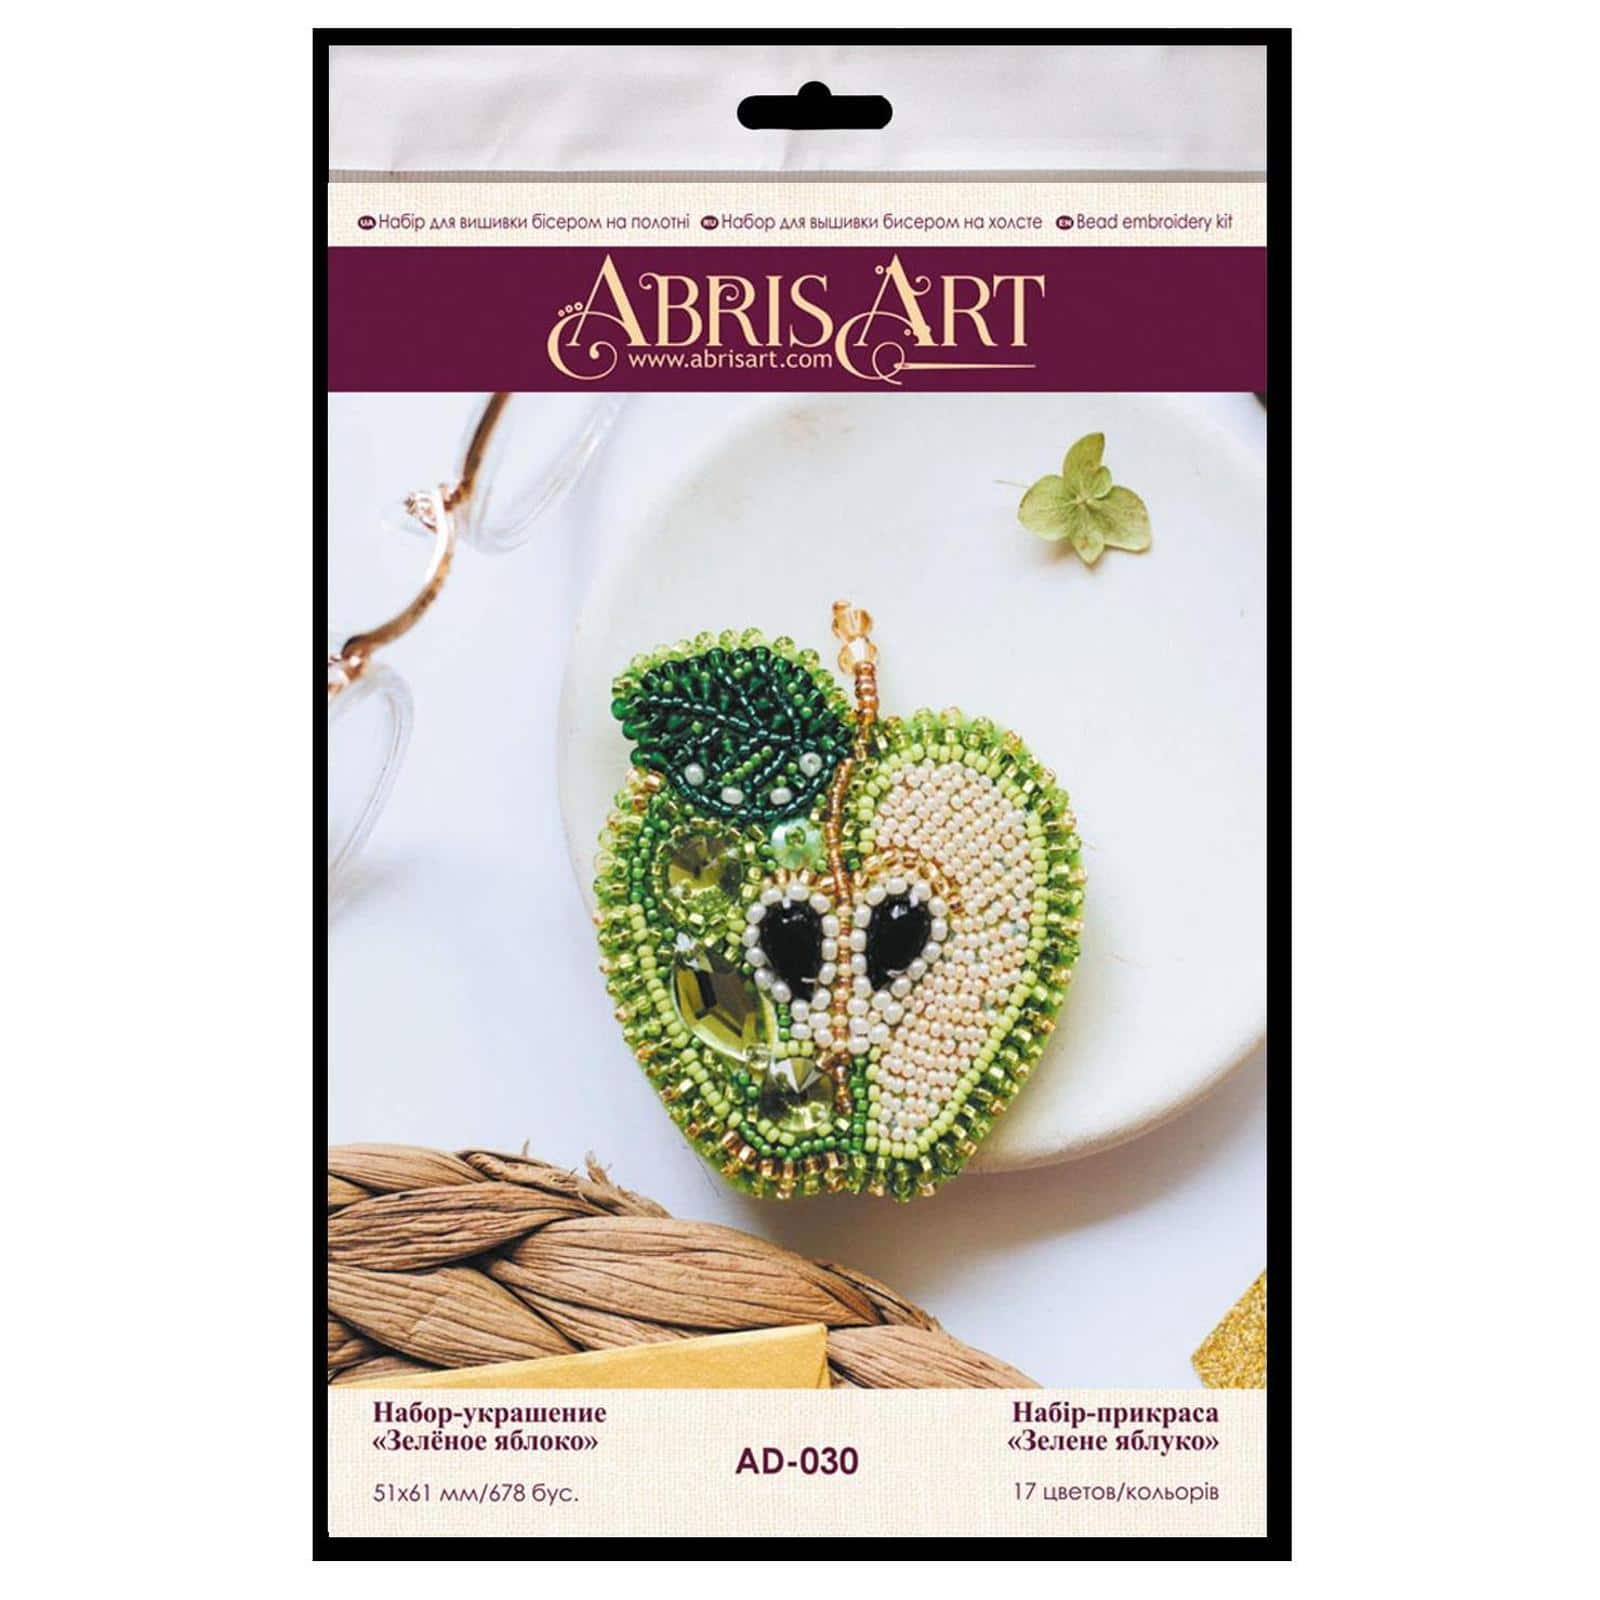 Abris Art Green Apple Decoration Kit